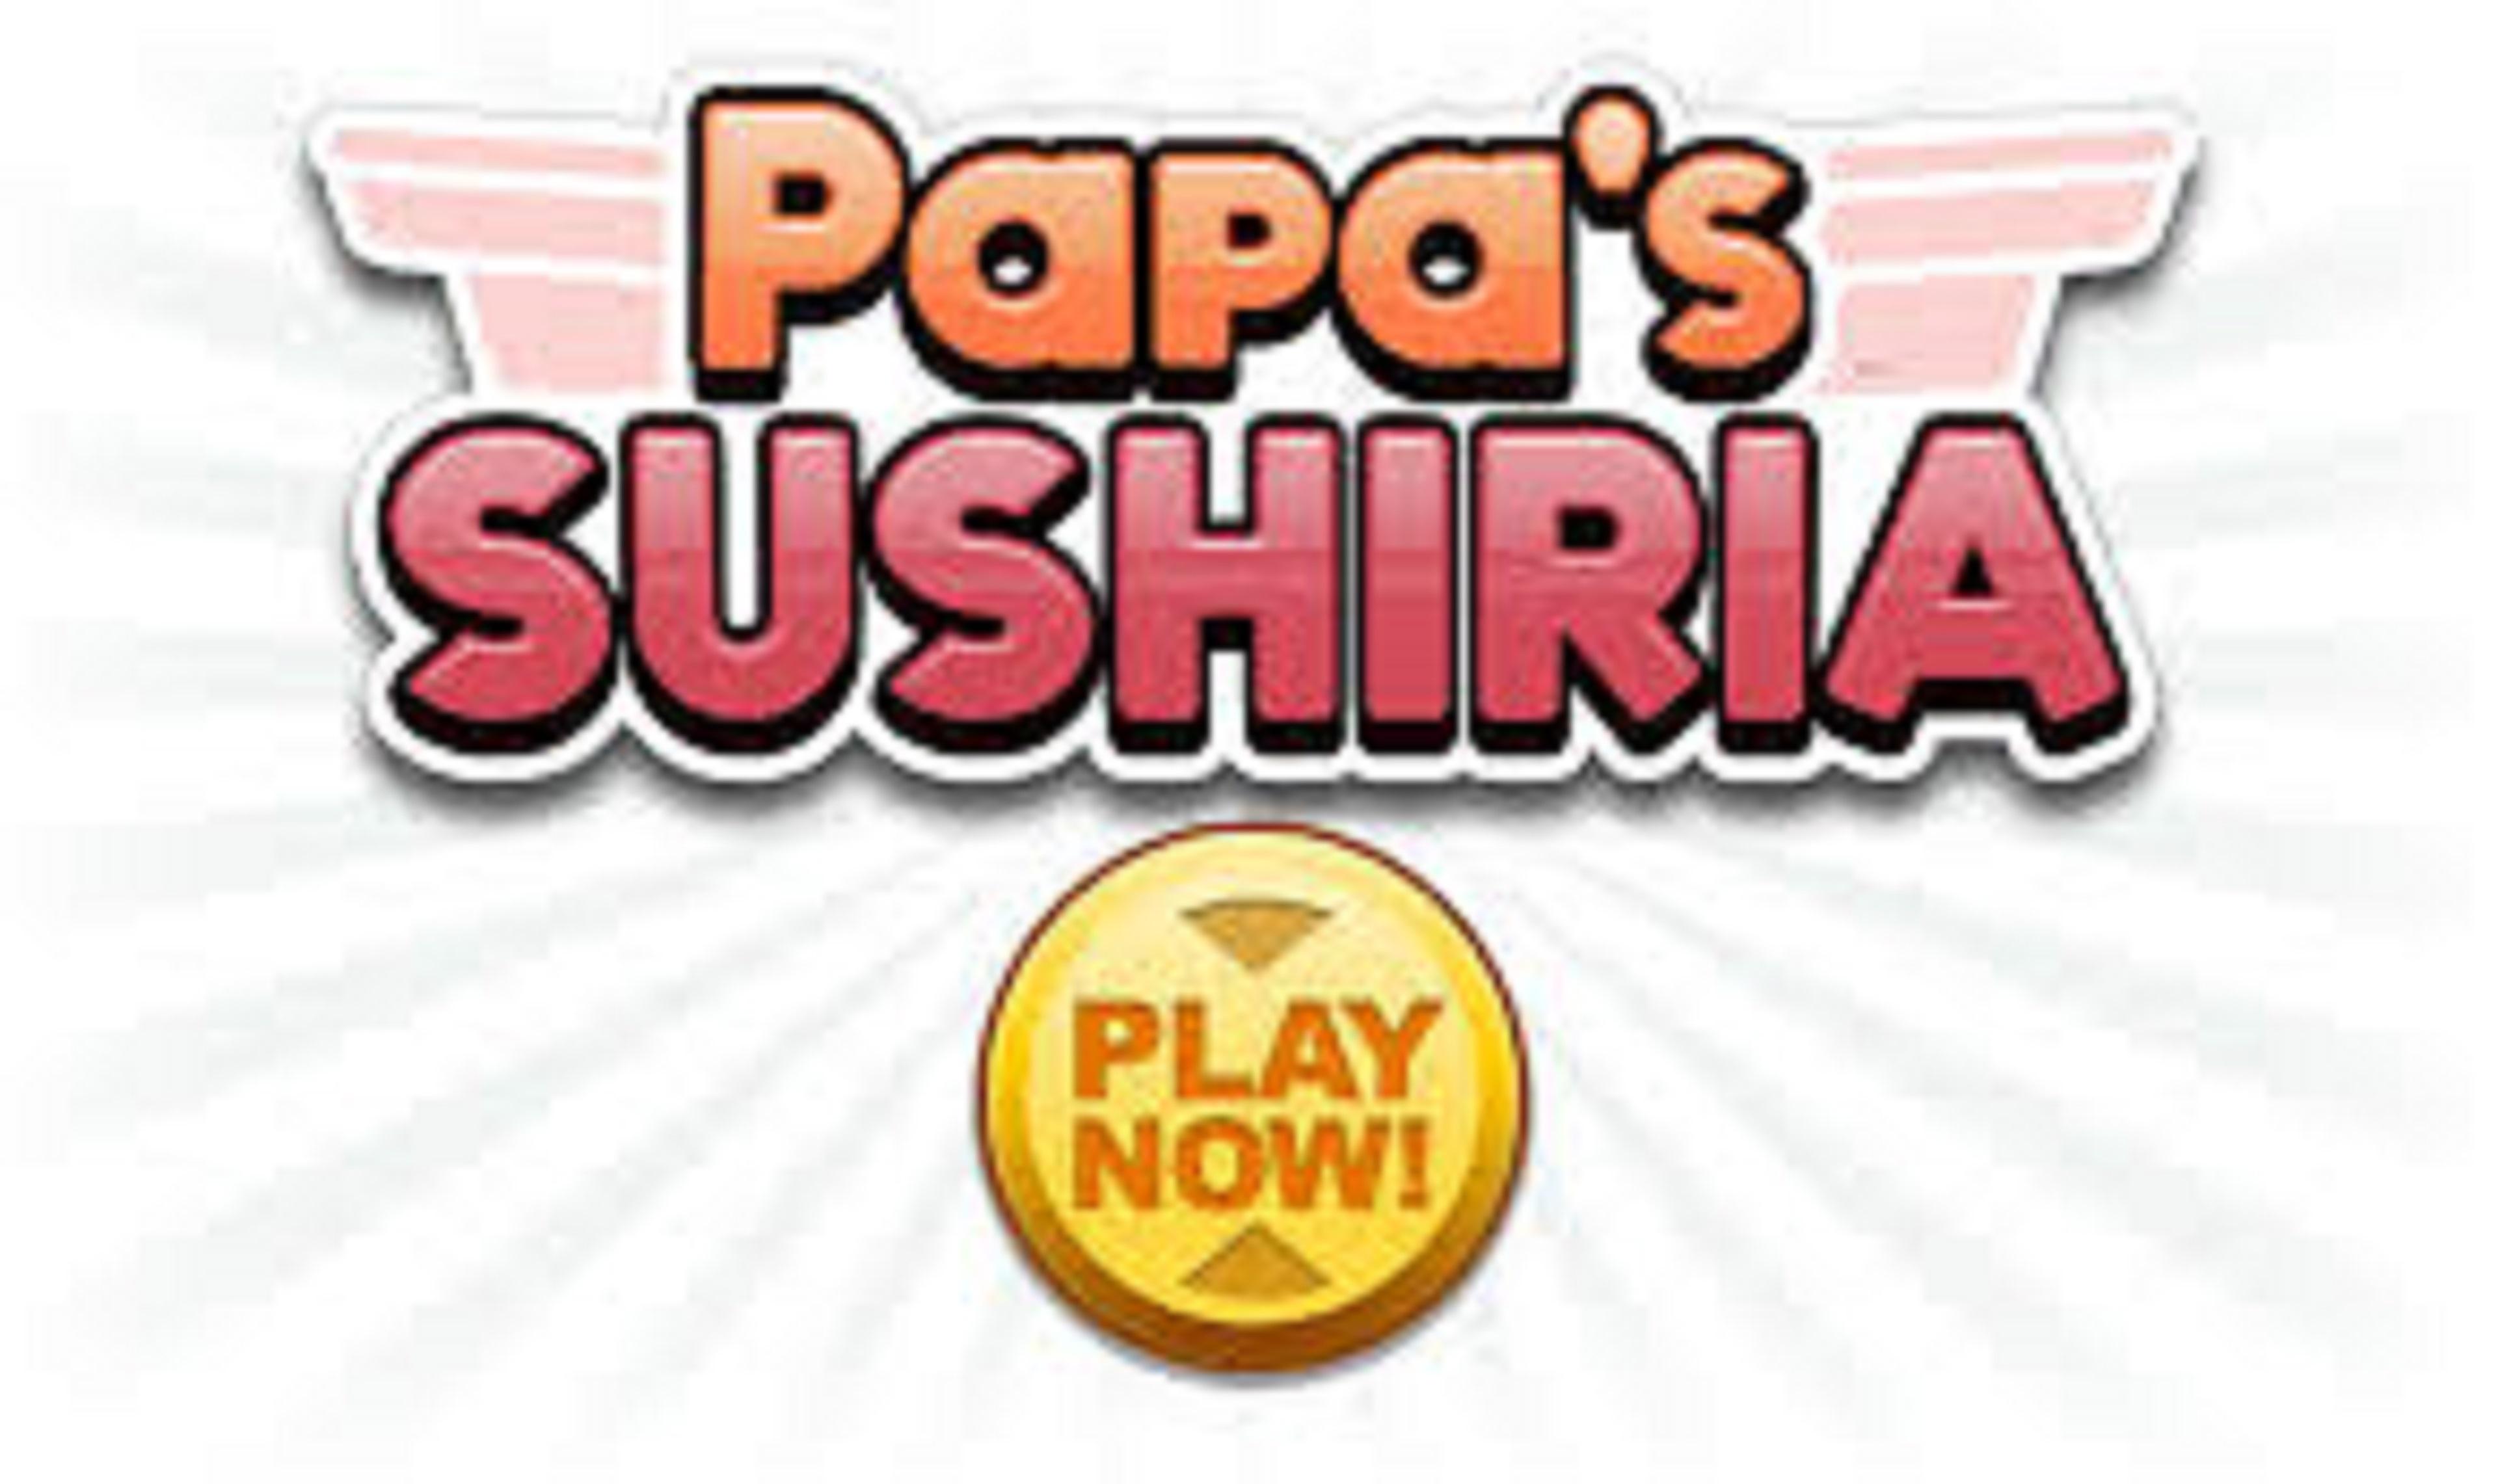 Papa's Sushiria To Go! - Apps on Google Play